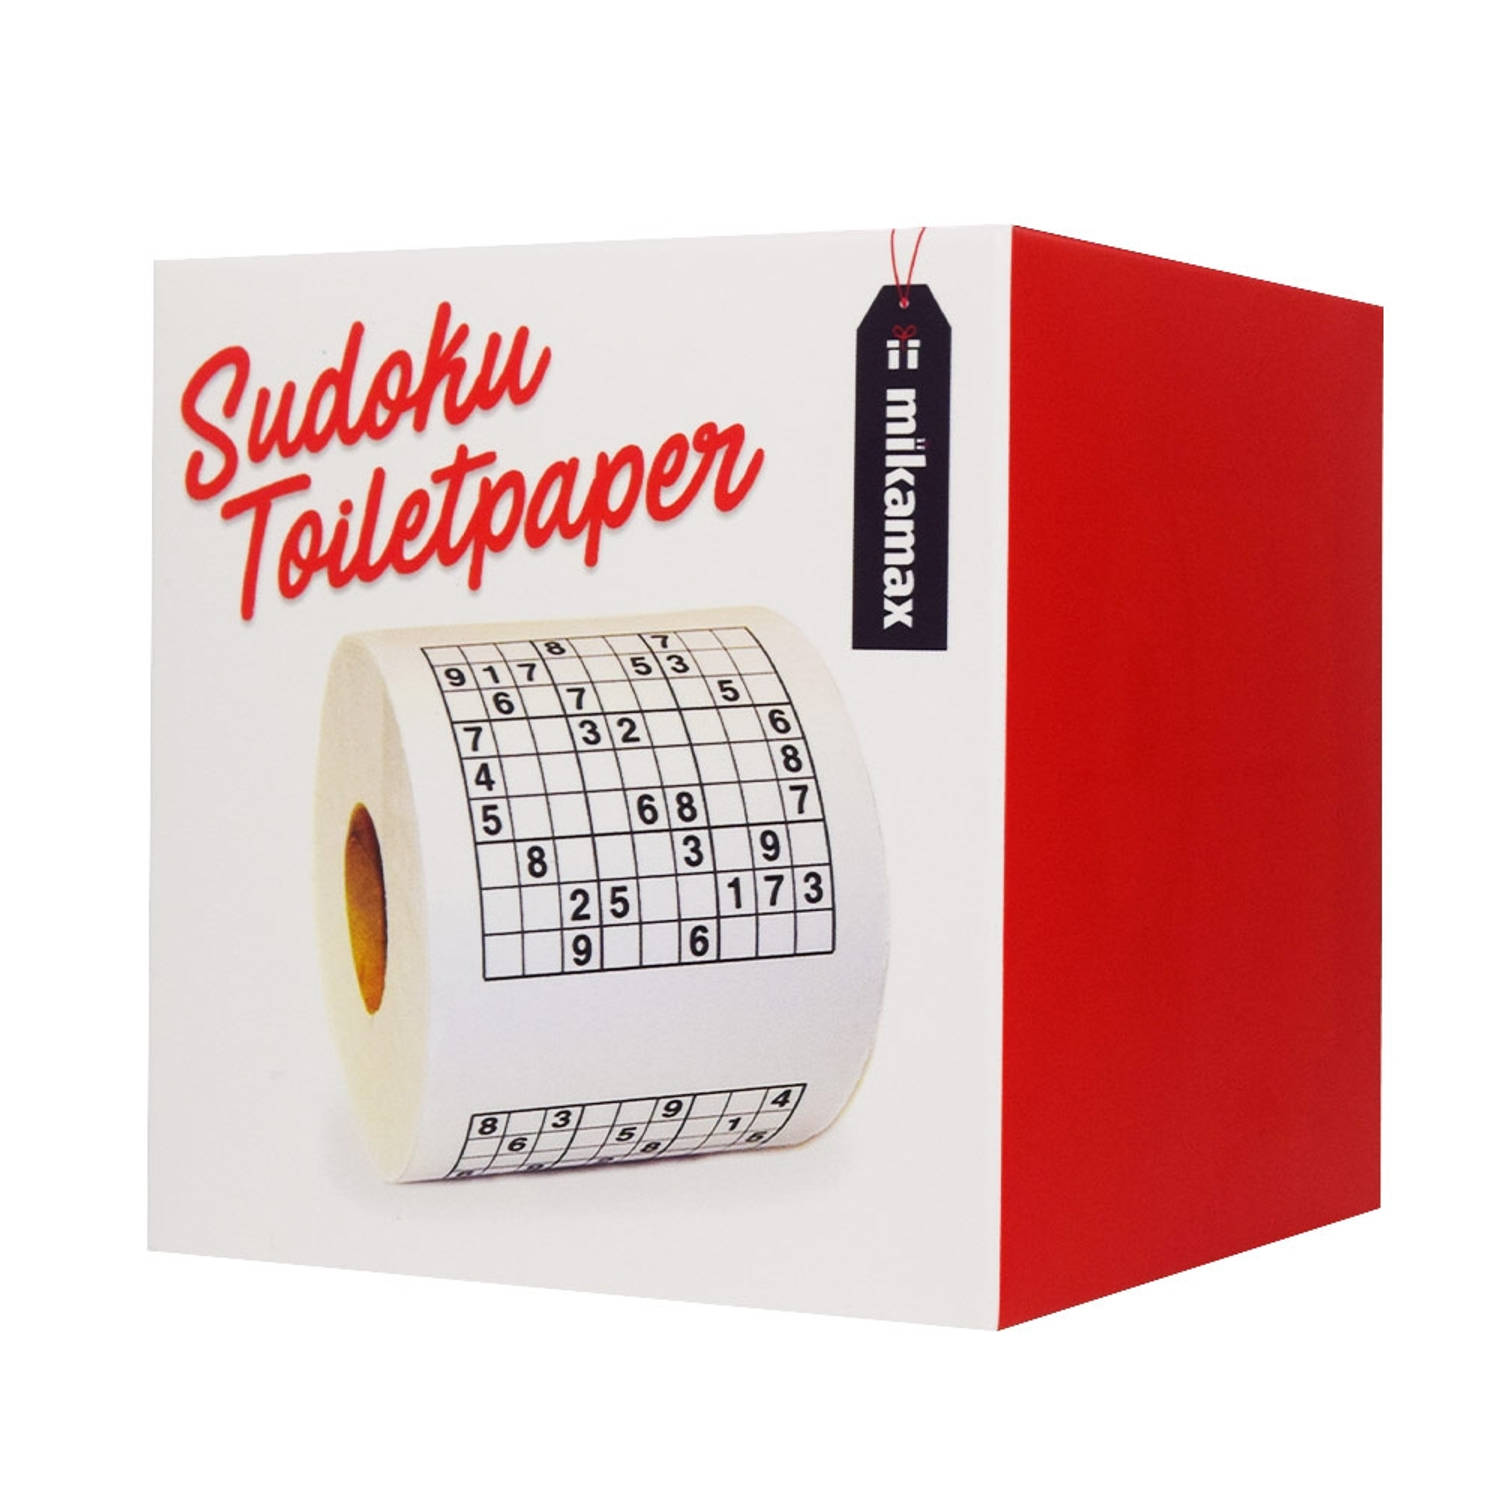 MikaMax Sudoku WC Papier -  Sudoku - Iedervel een andere Sudoku - Toiletpapier - Puzzels - Puzzel